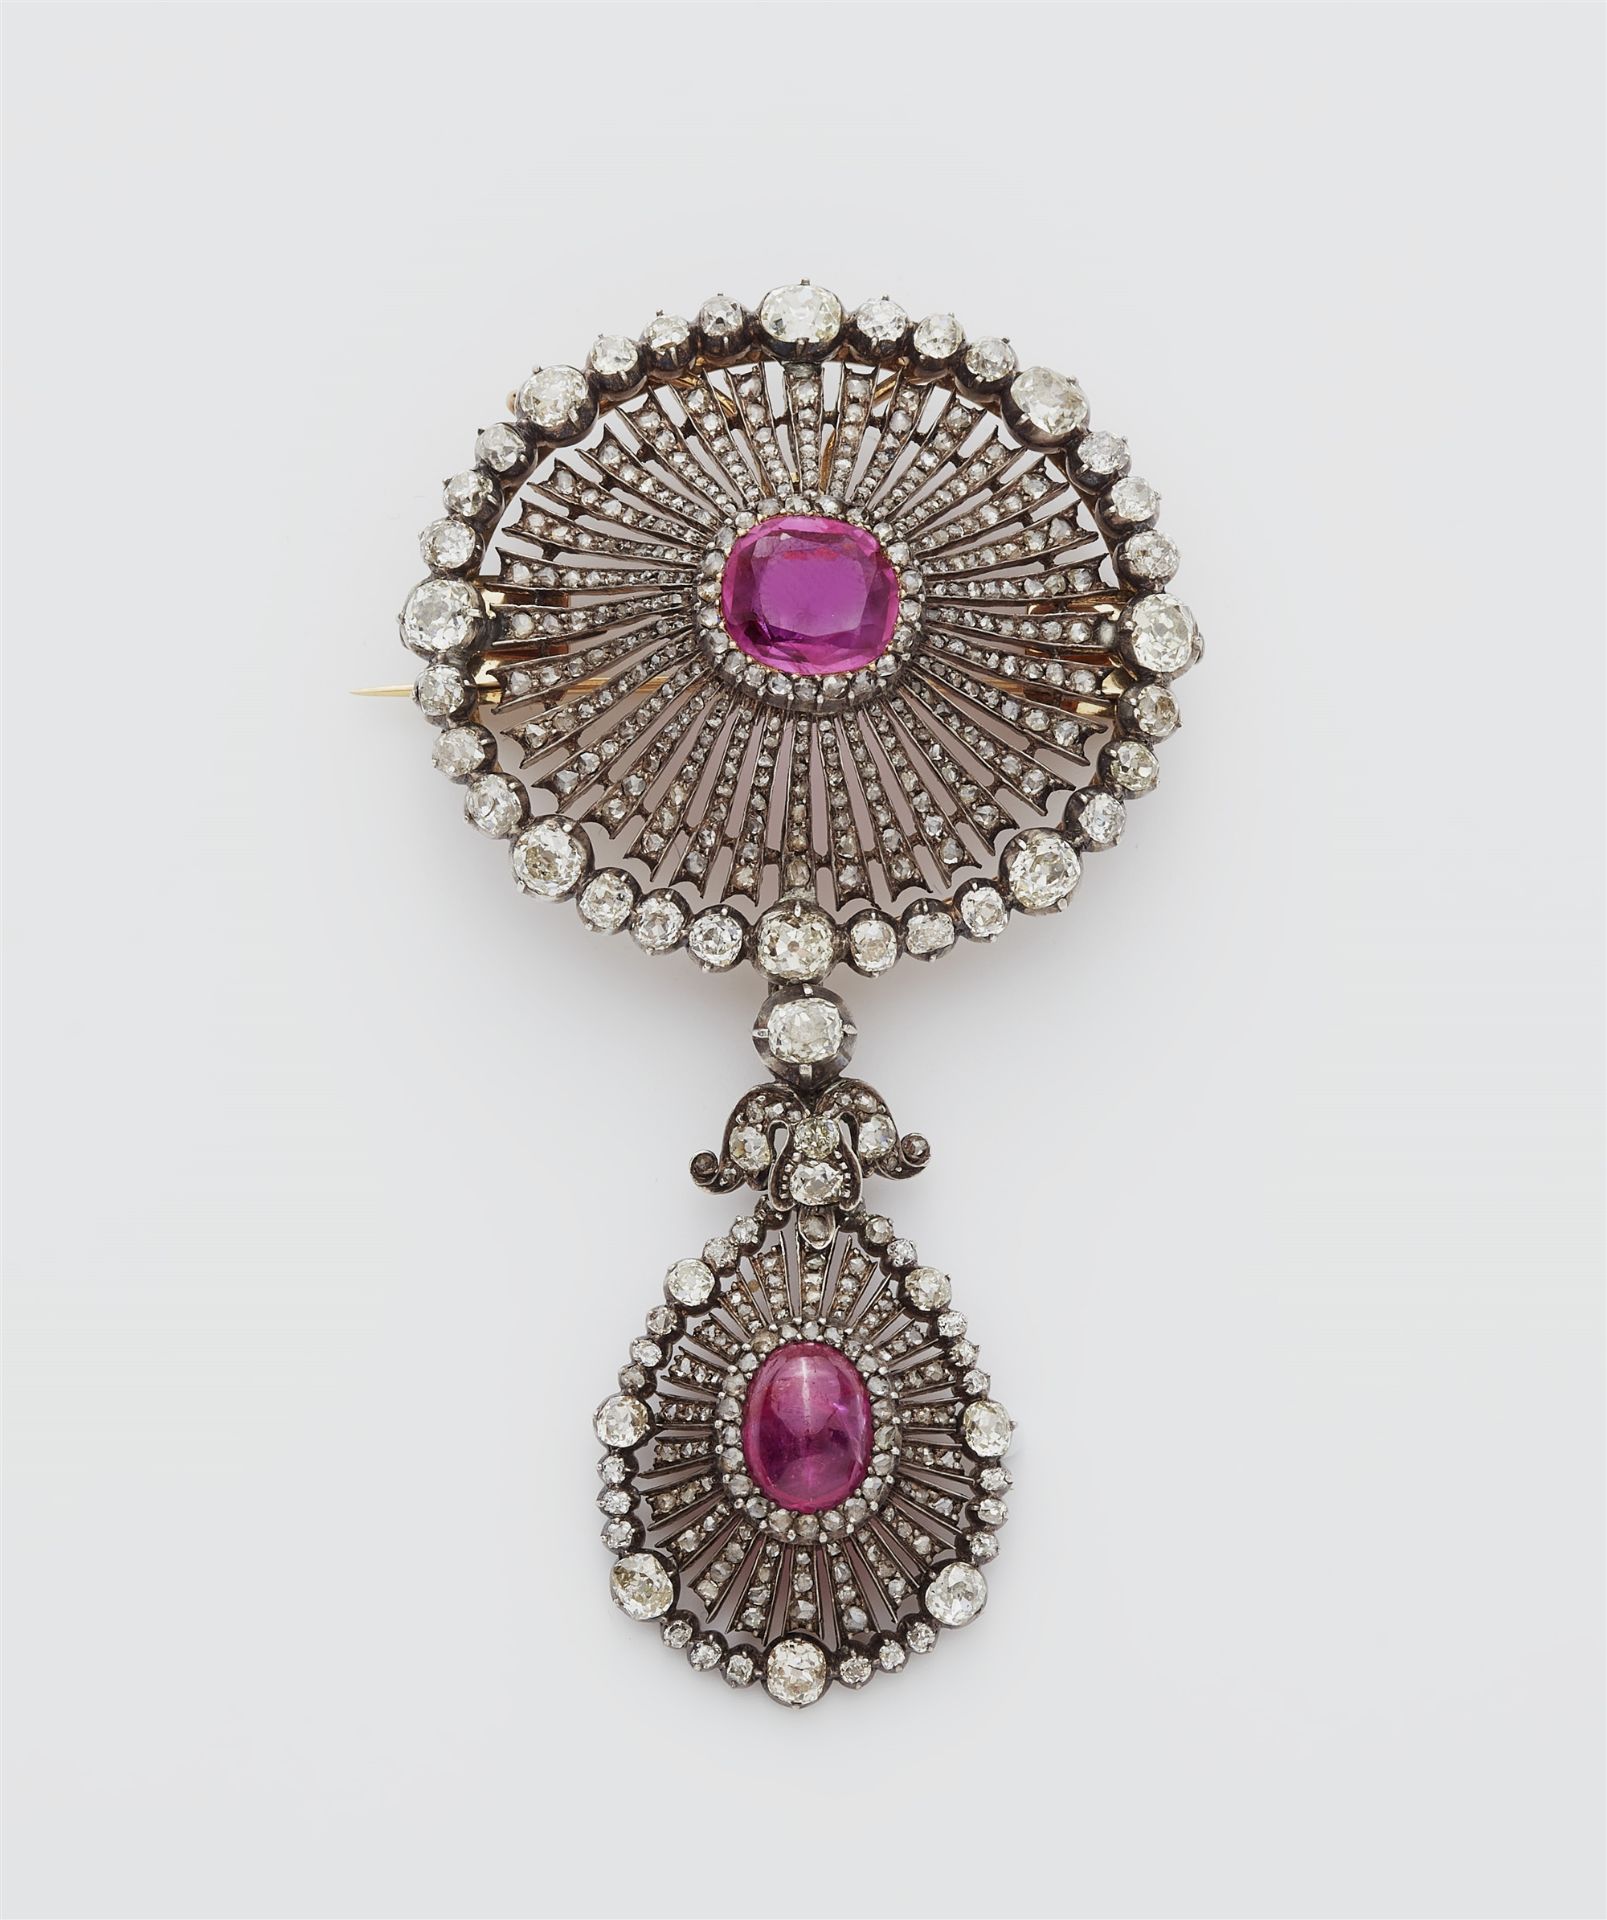 A 14k gold, diamond and Burma ruby pendant brooch.